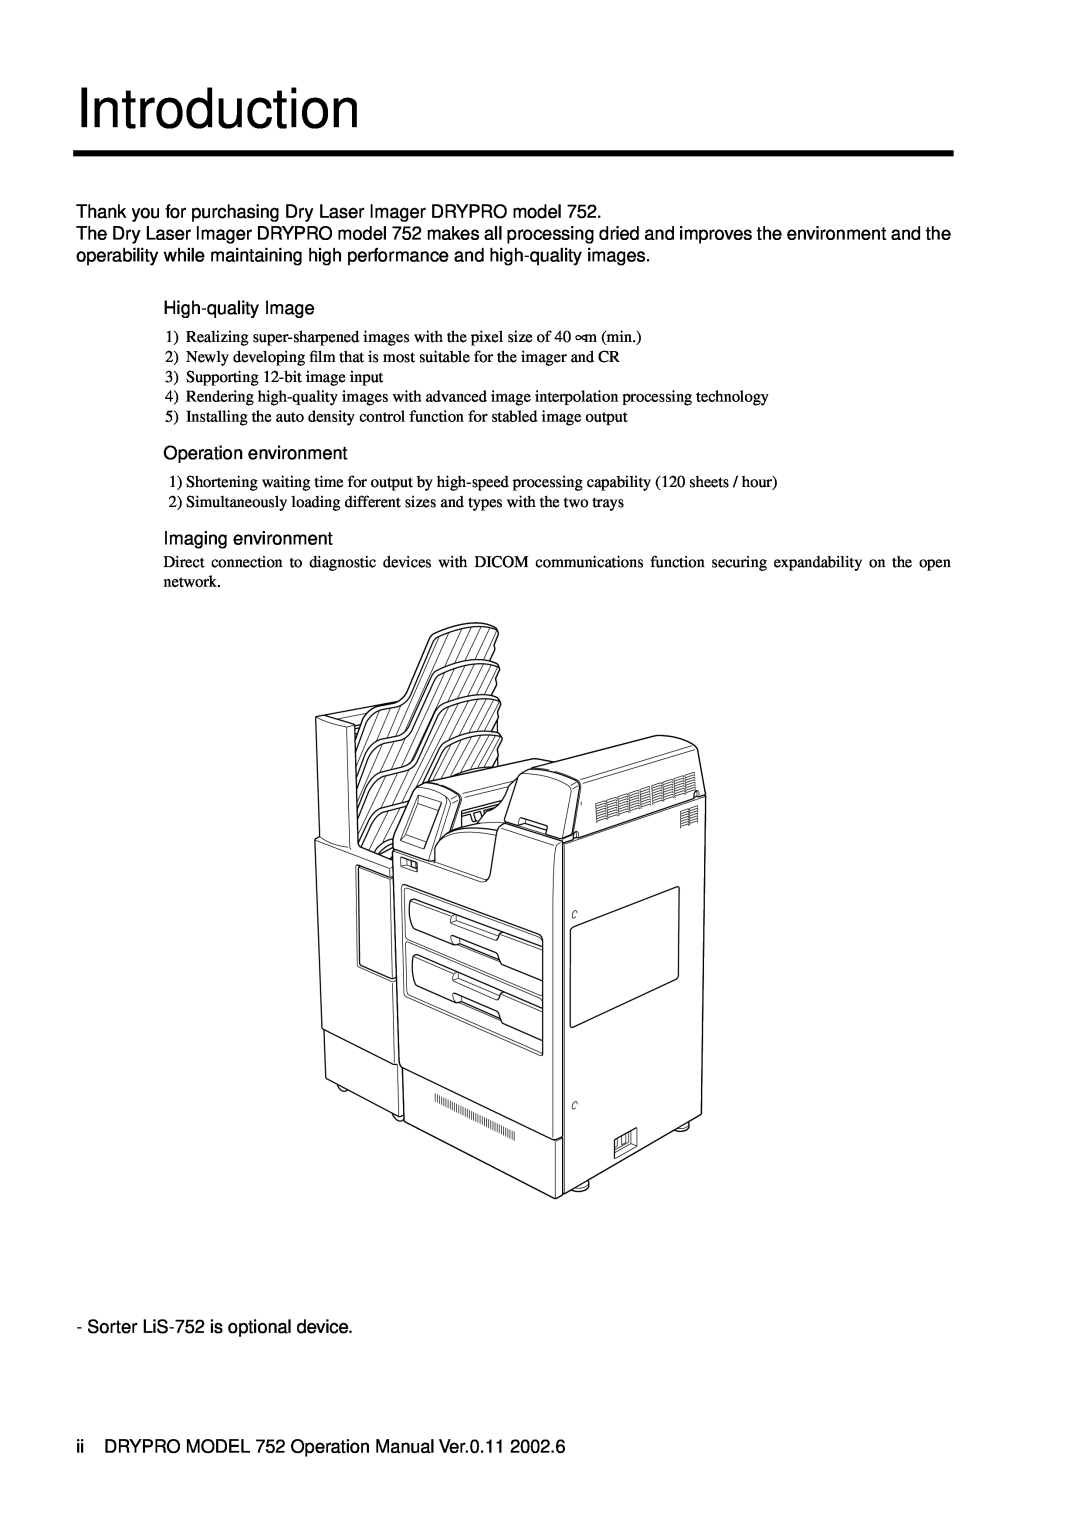 Konica Minolta 752 operation manual Introduction 